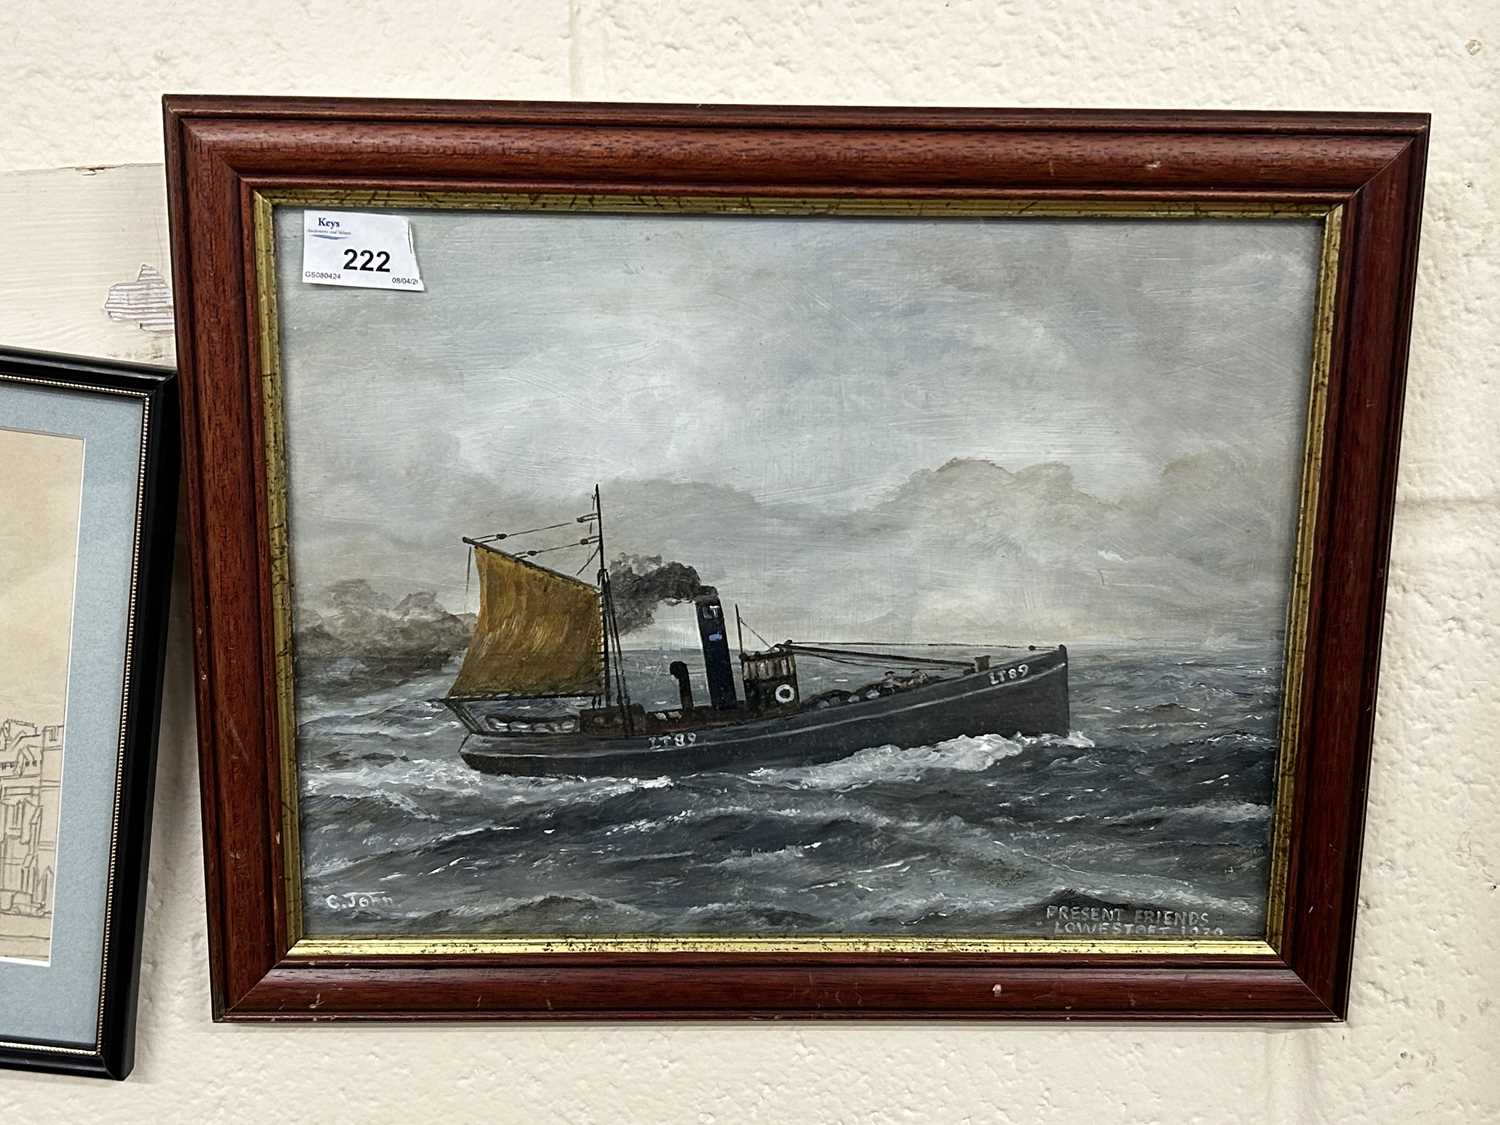 C.John, study of Lowestoft trawler Present Friends, oil on board, framed and glazed